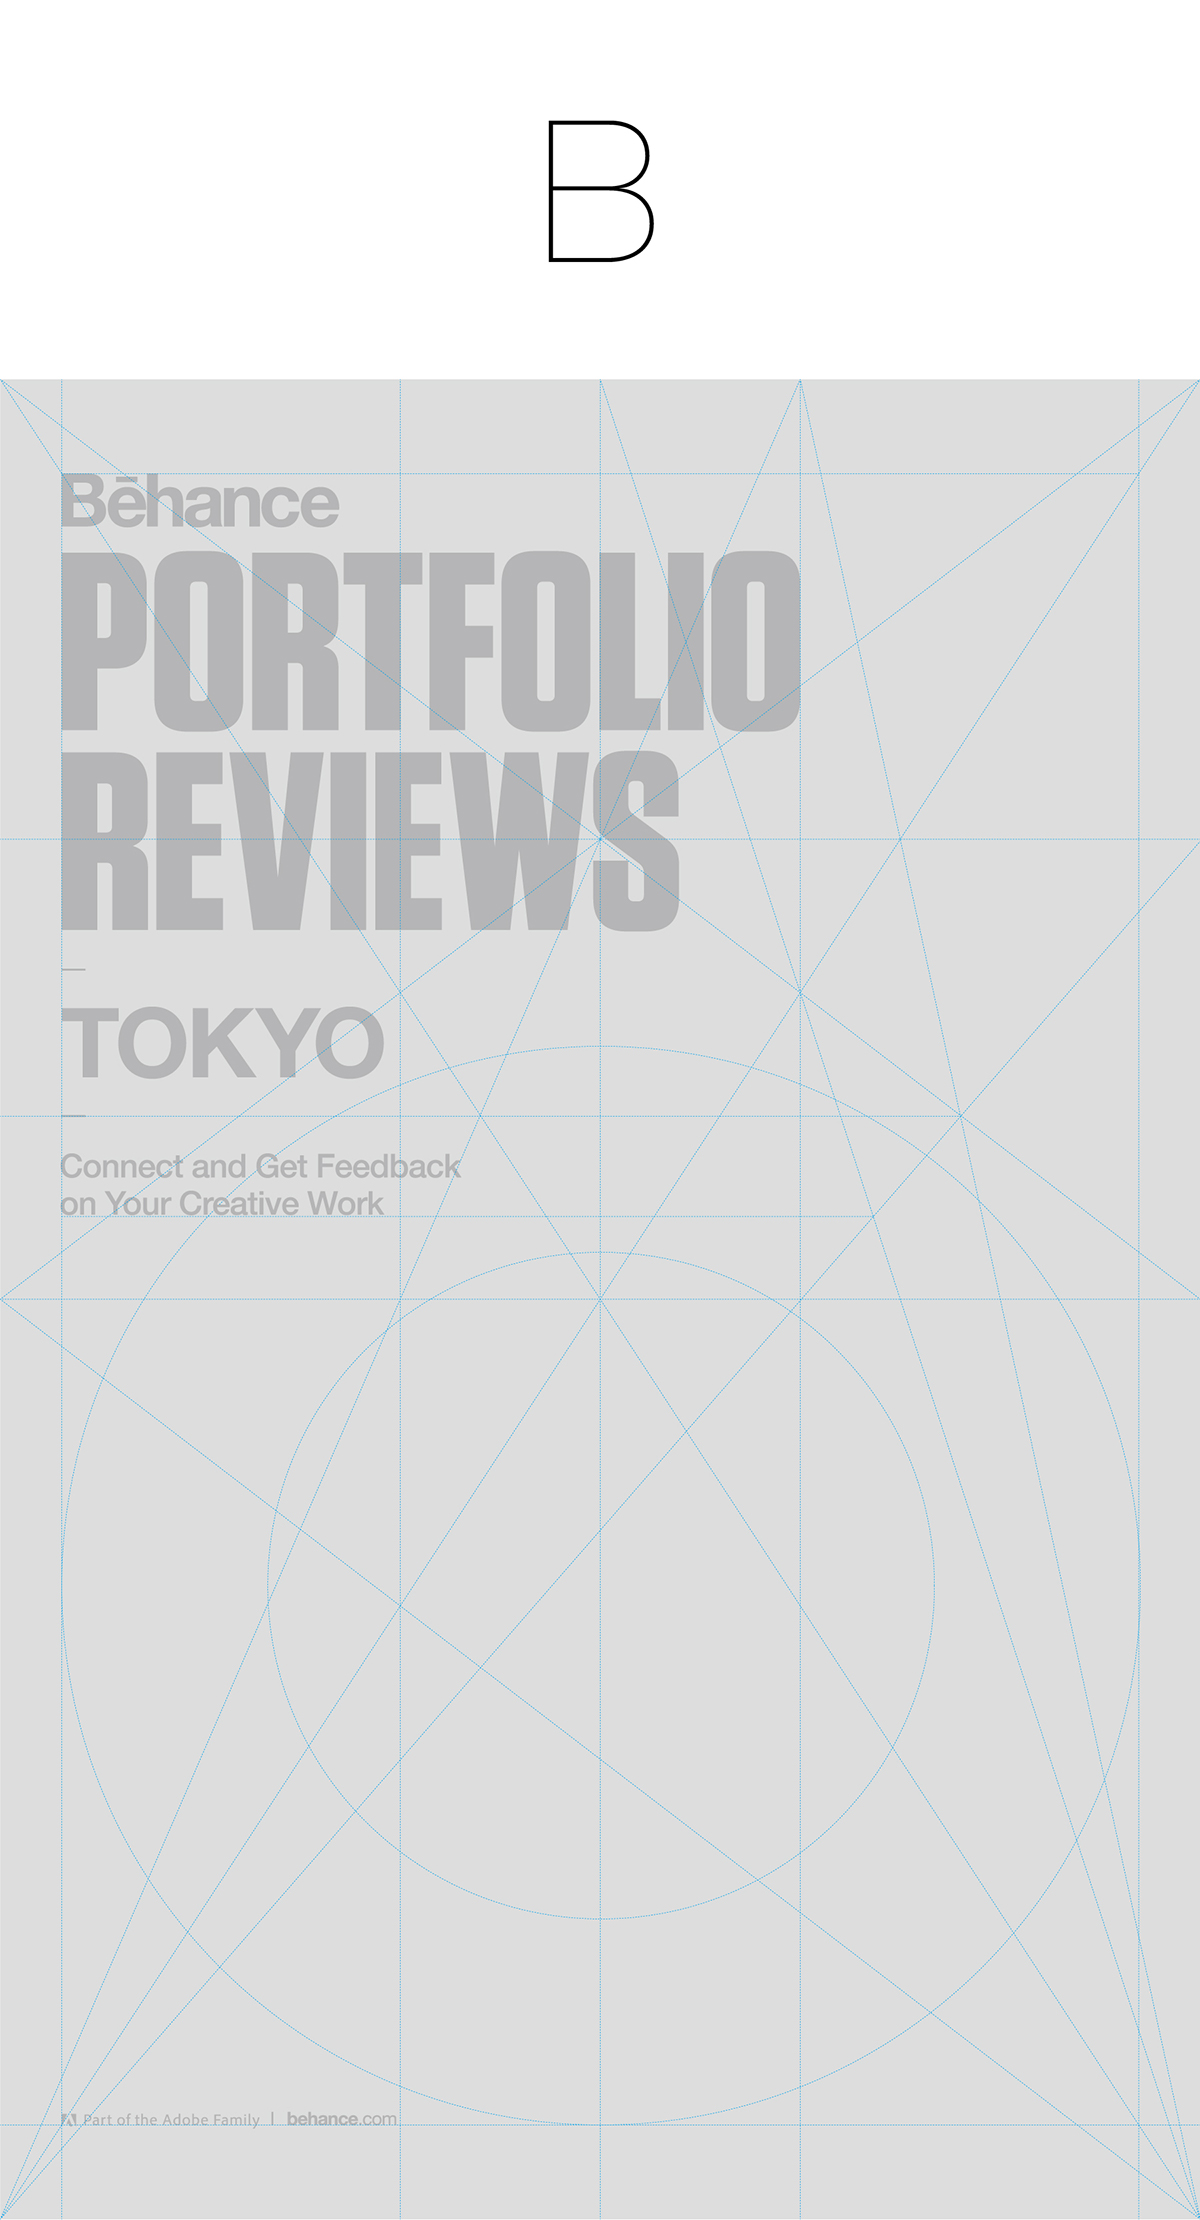 Behance reviews tokyo japan circle White graphic grid enhanced blue construction red Event portfolio